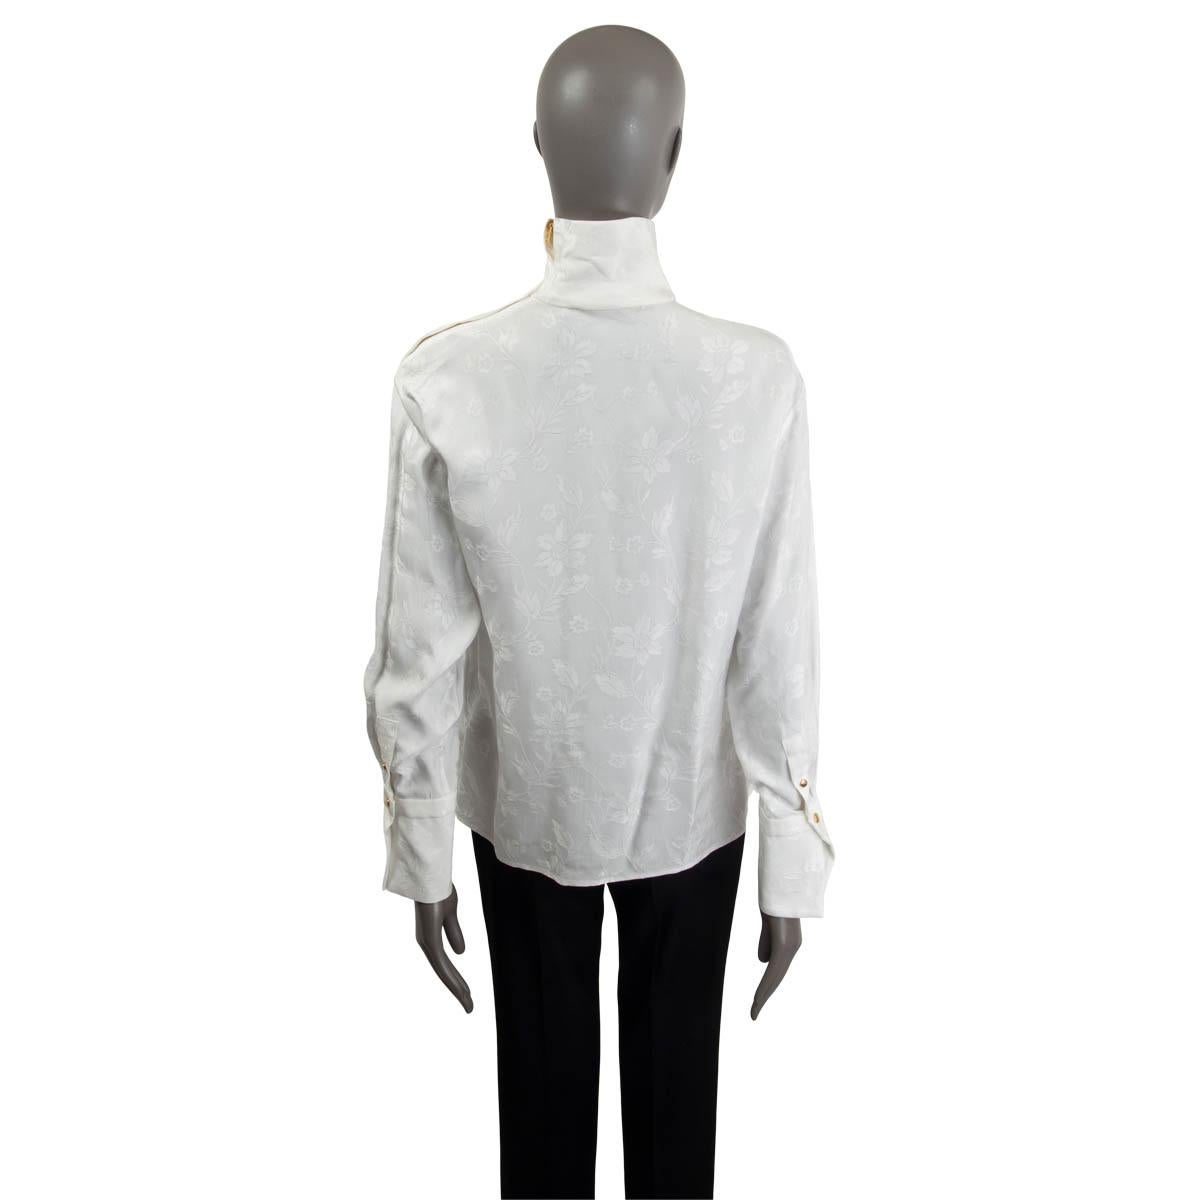 CHLOE ivory FLORAL JACQUARD ZIP TURTLENECK Blouse Shirt 36 XS For Sale 1